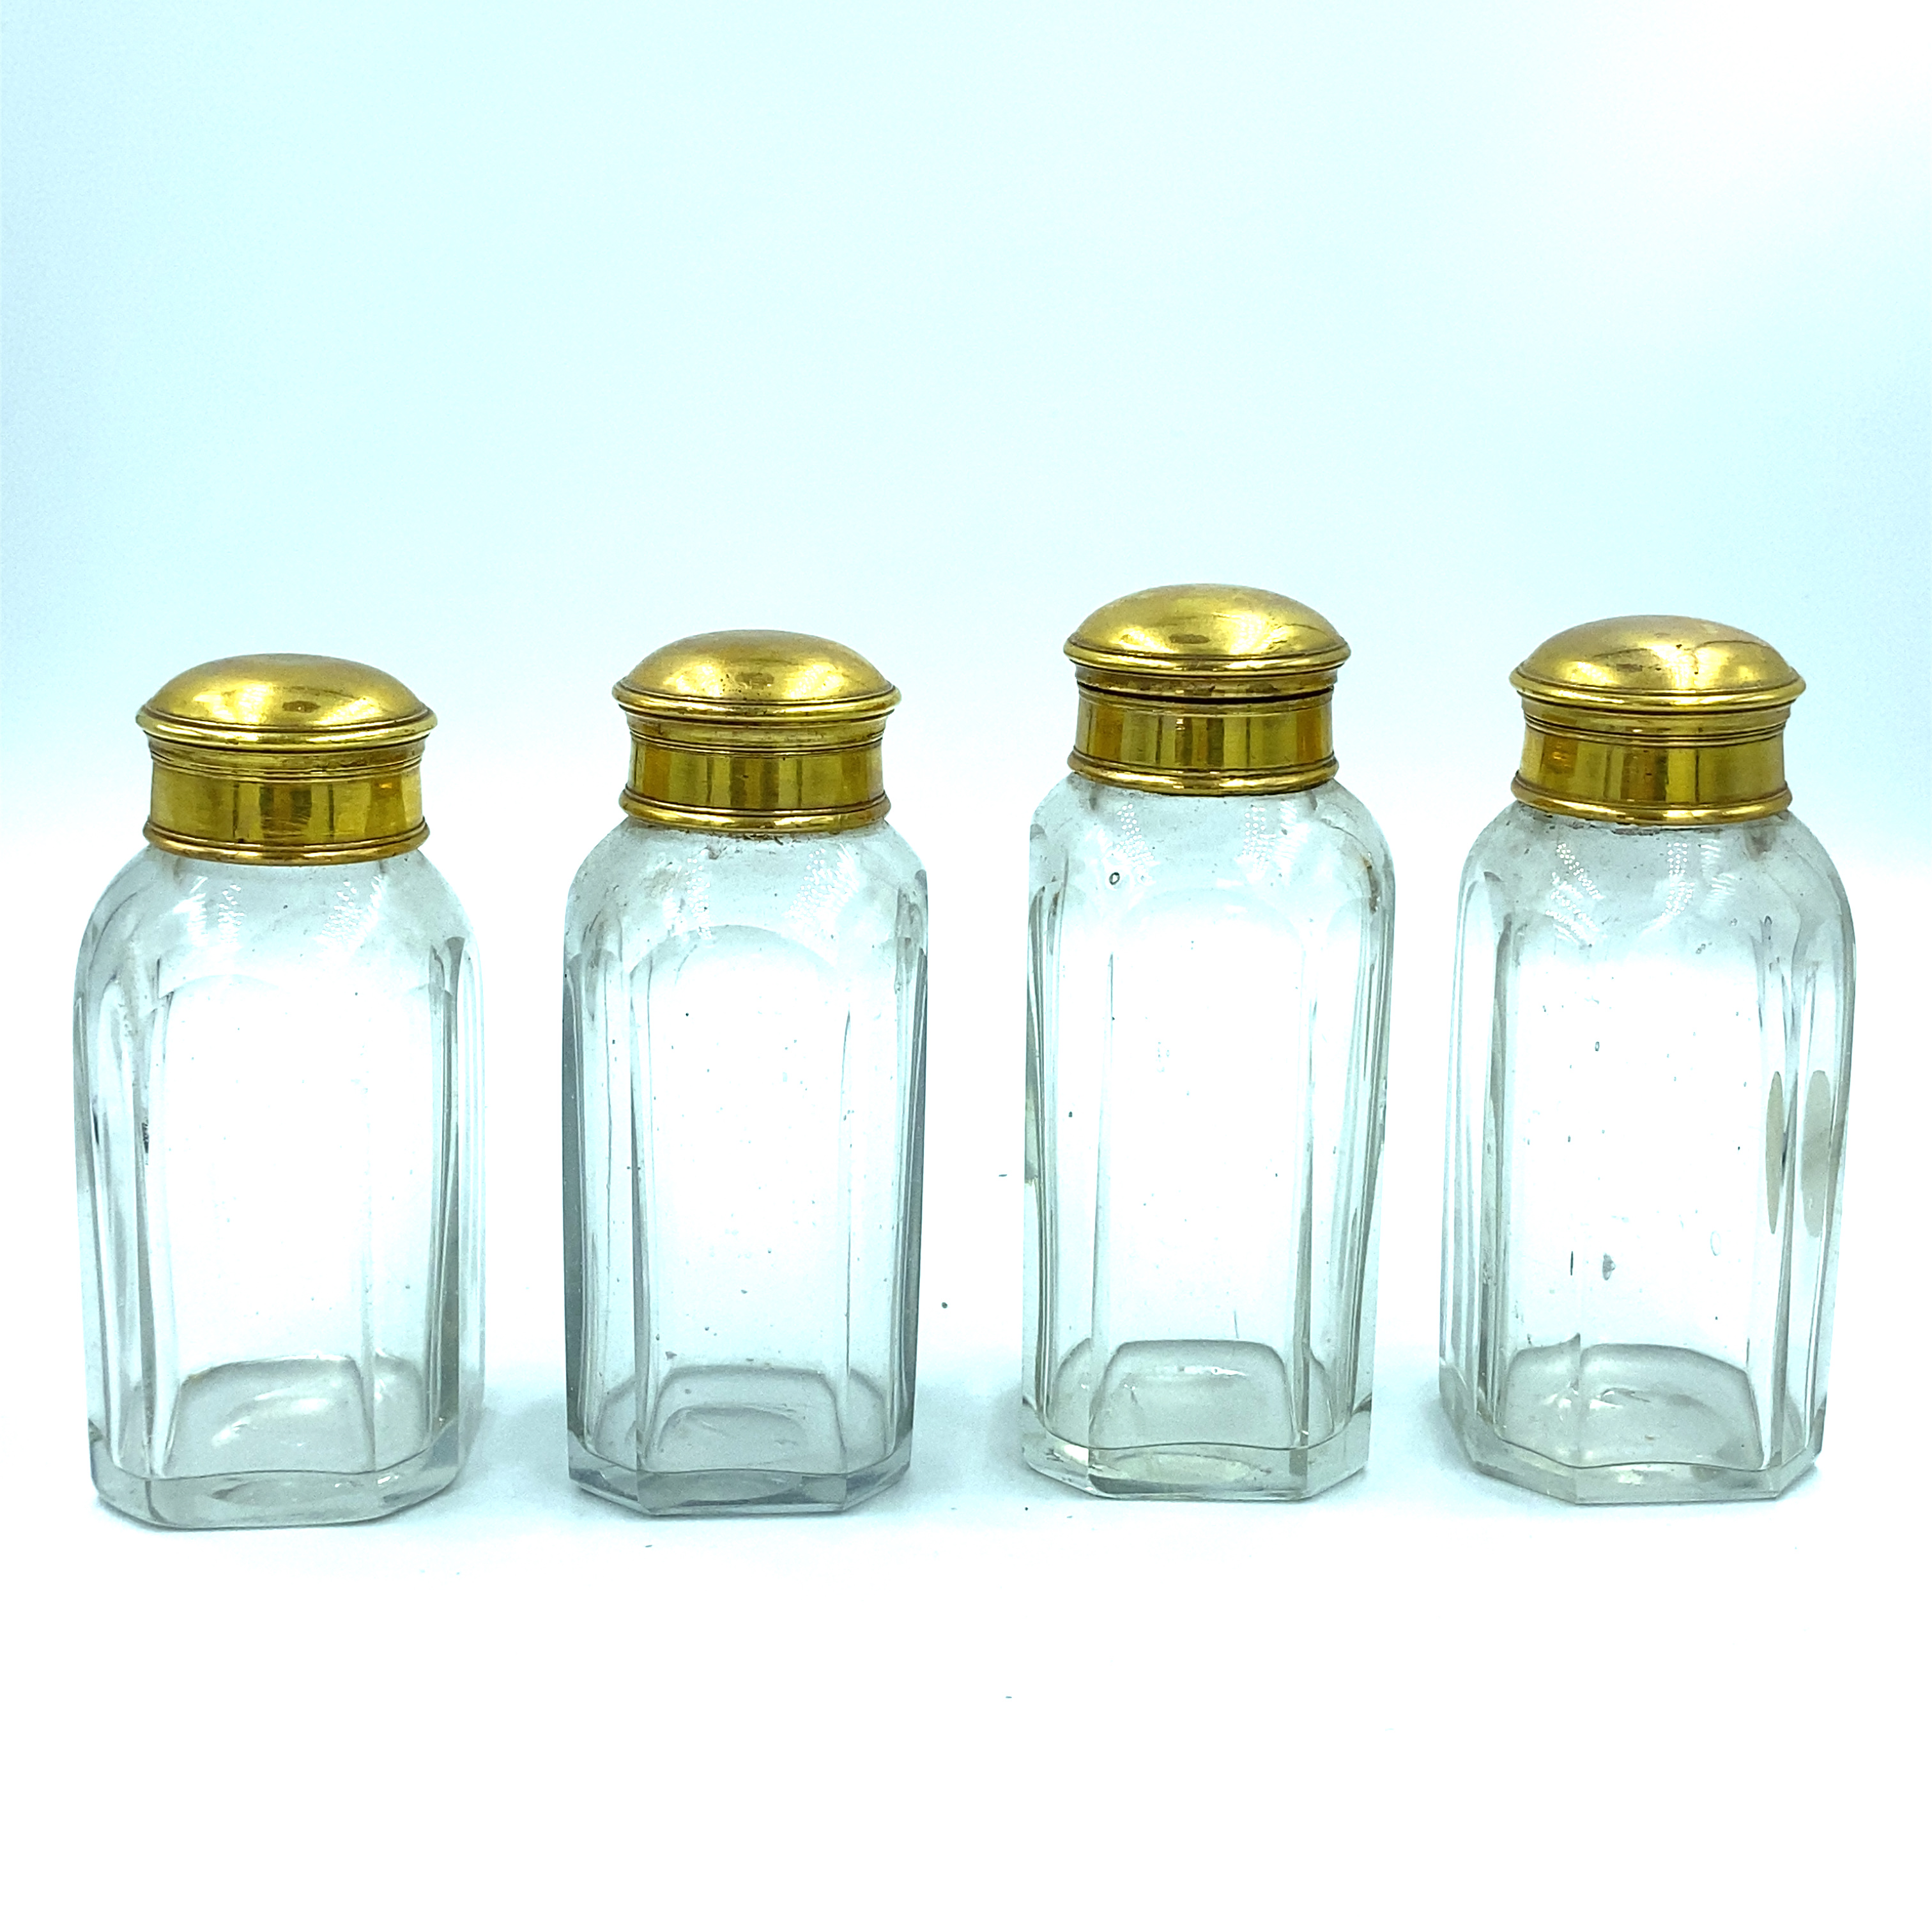 Four Perfume Bottles - Image 3 of 5